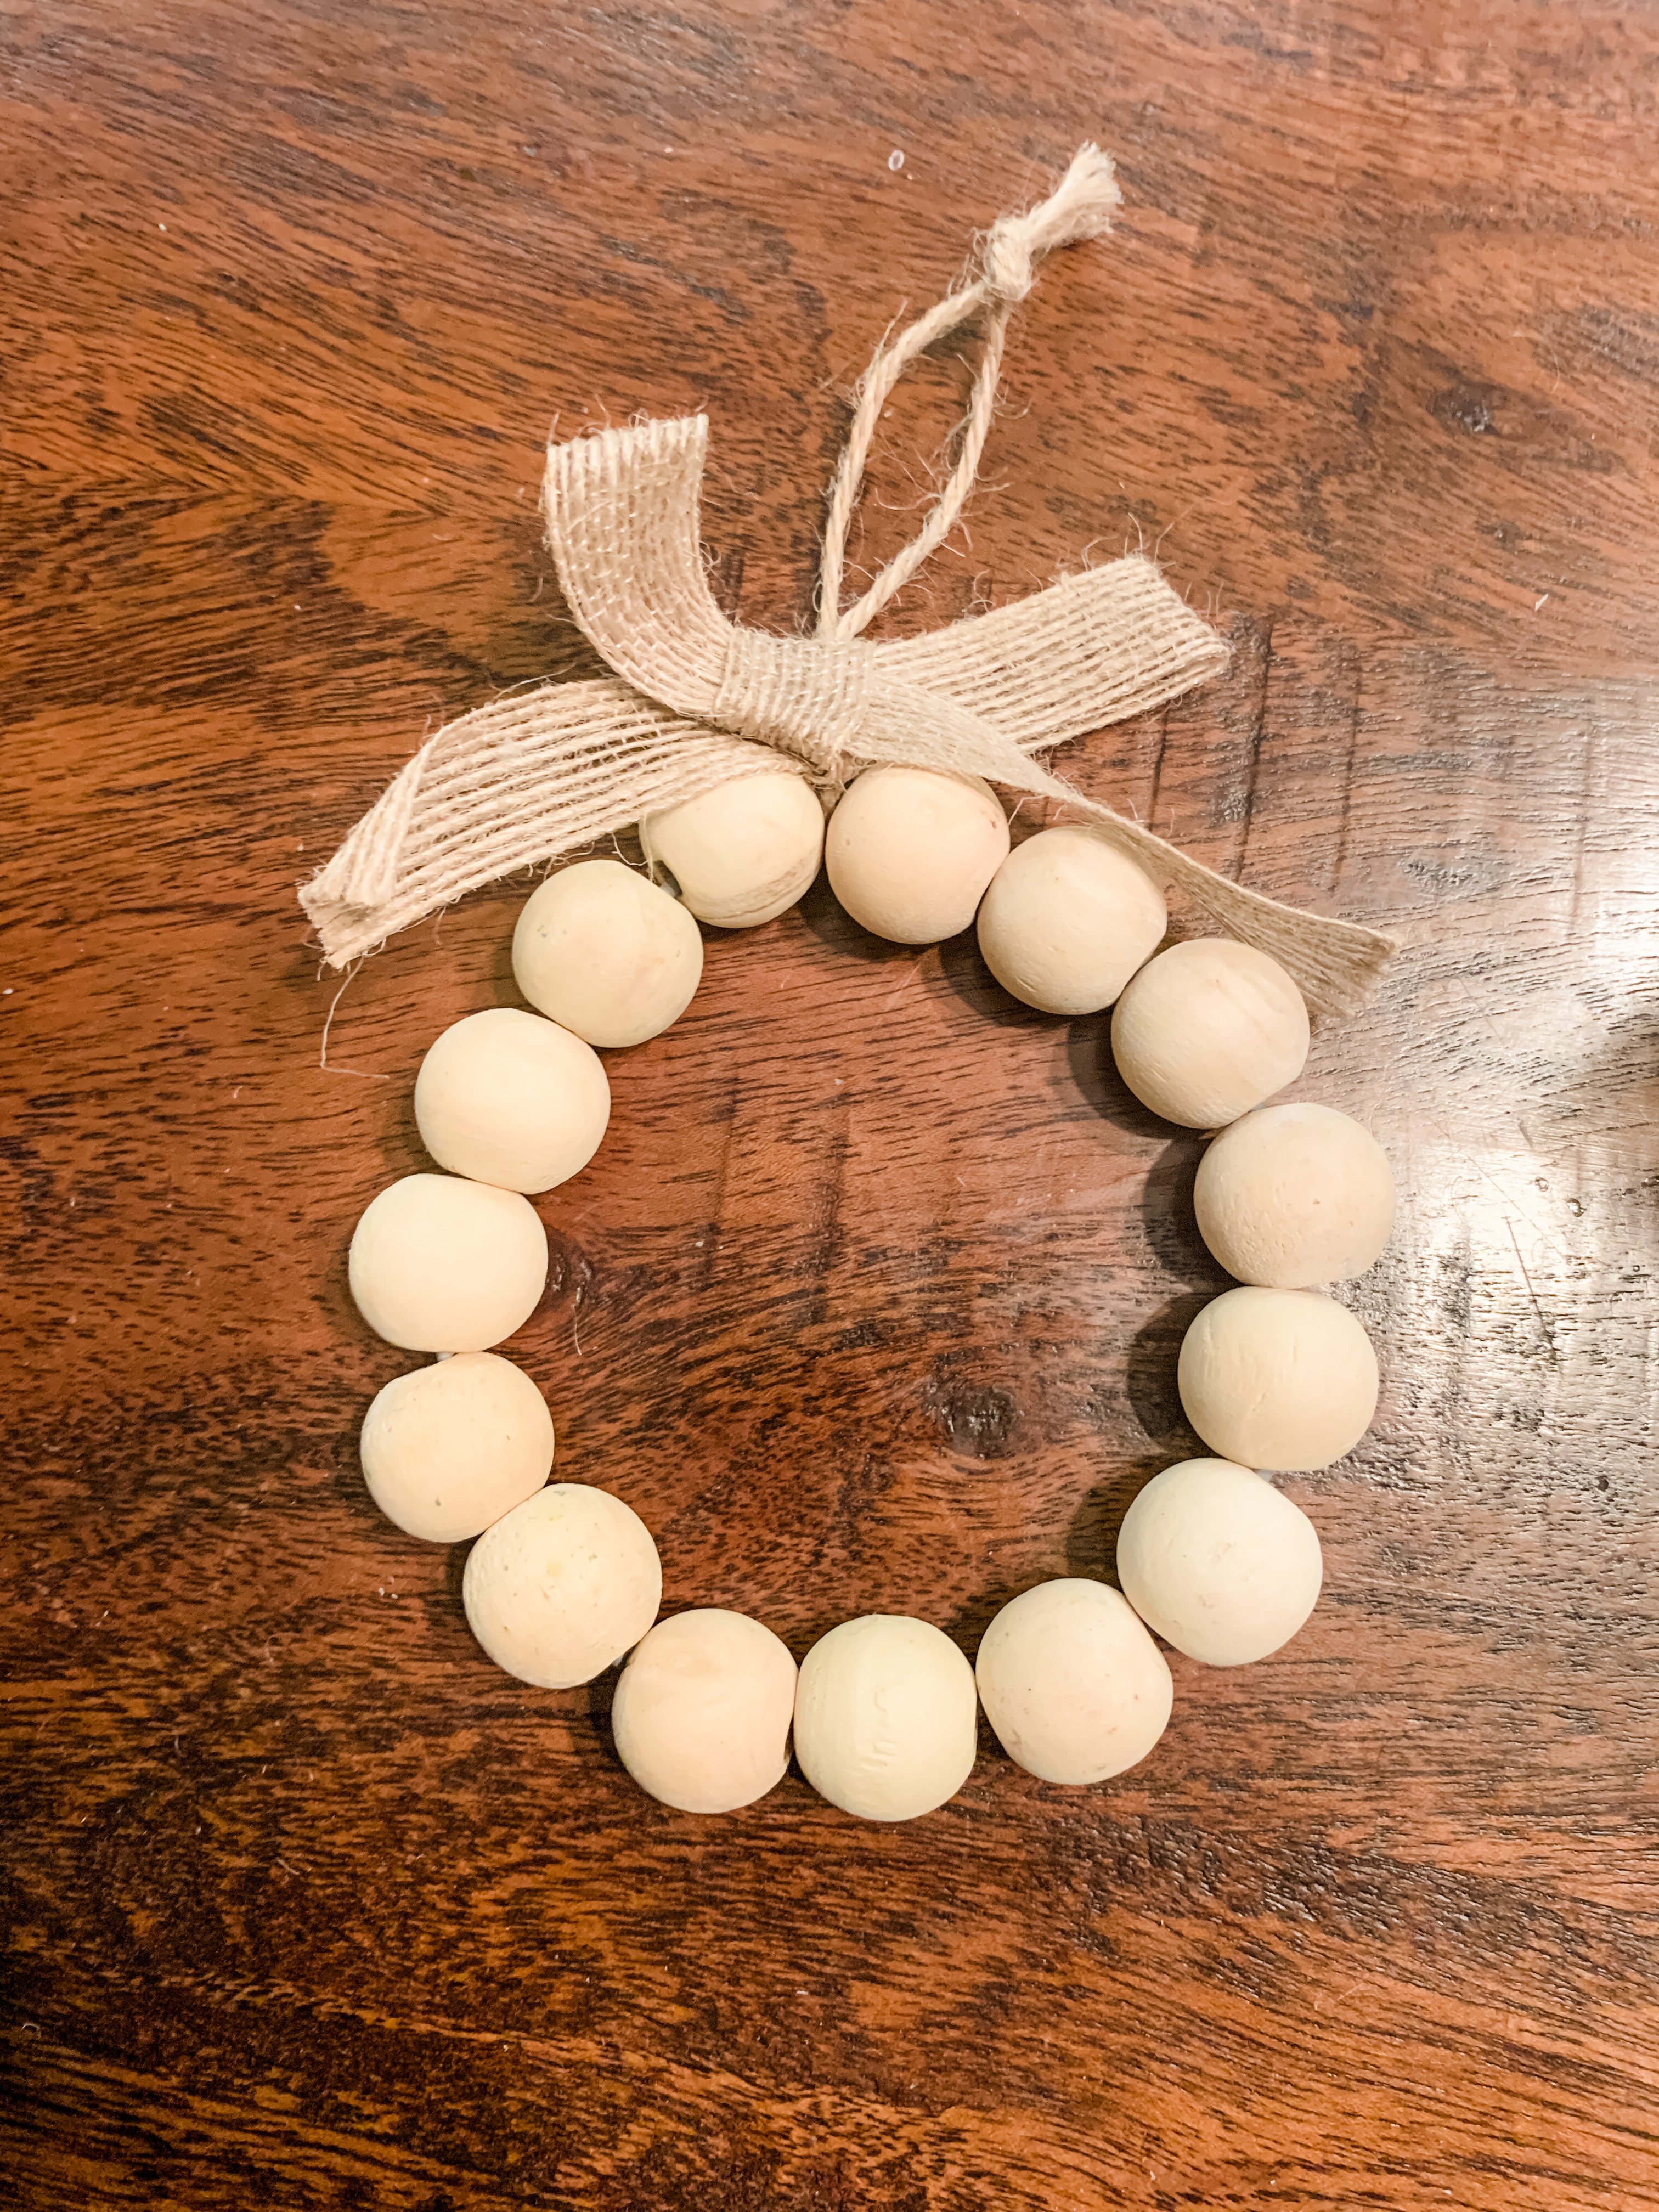 Wood bead DIY Christmas ornaments, so cute and easy! 